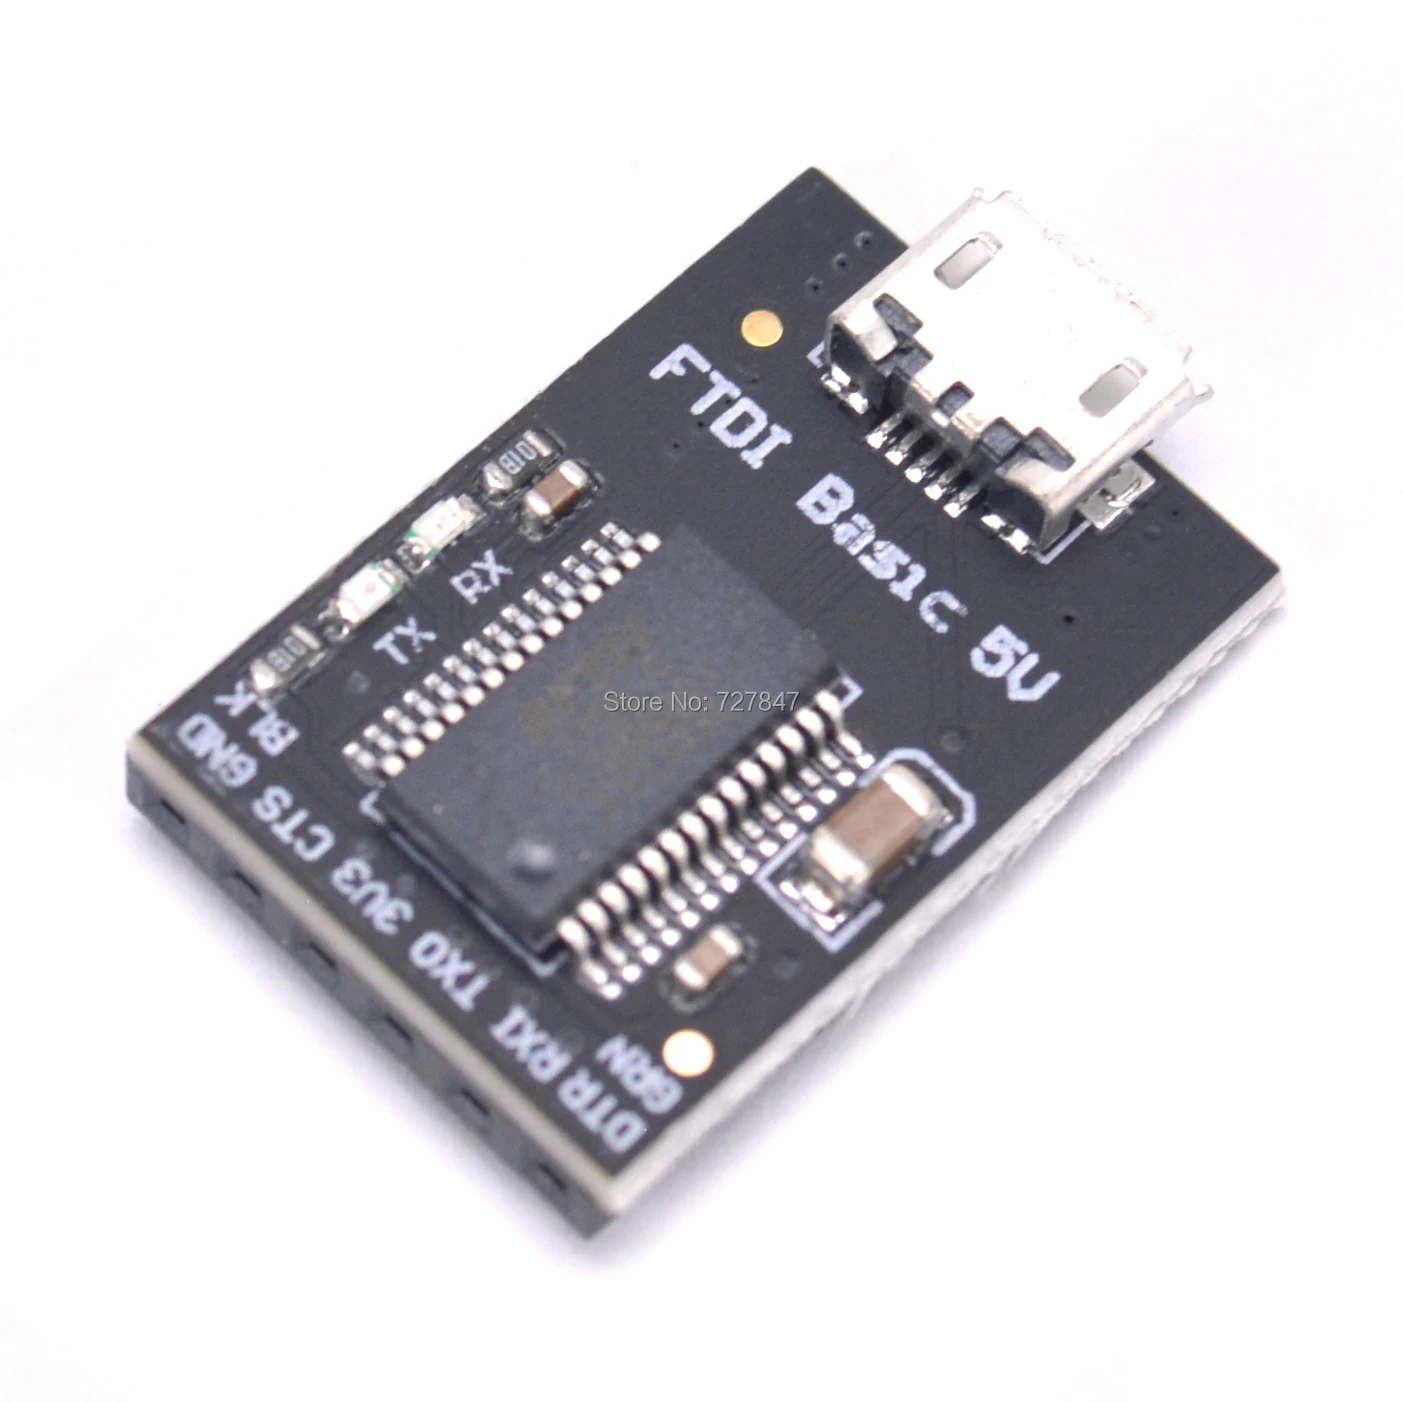 

NEW FTDI Basic USB-TTL 6 PIN 5V Fio Pro RGB Lilypad Program Downloader For Arduino Micro USB